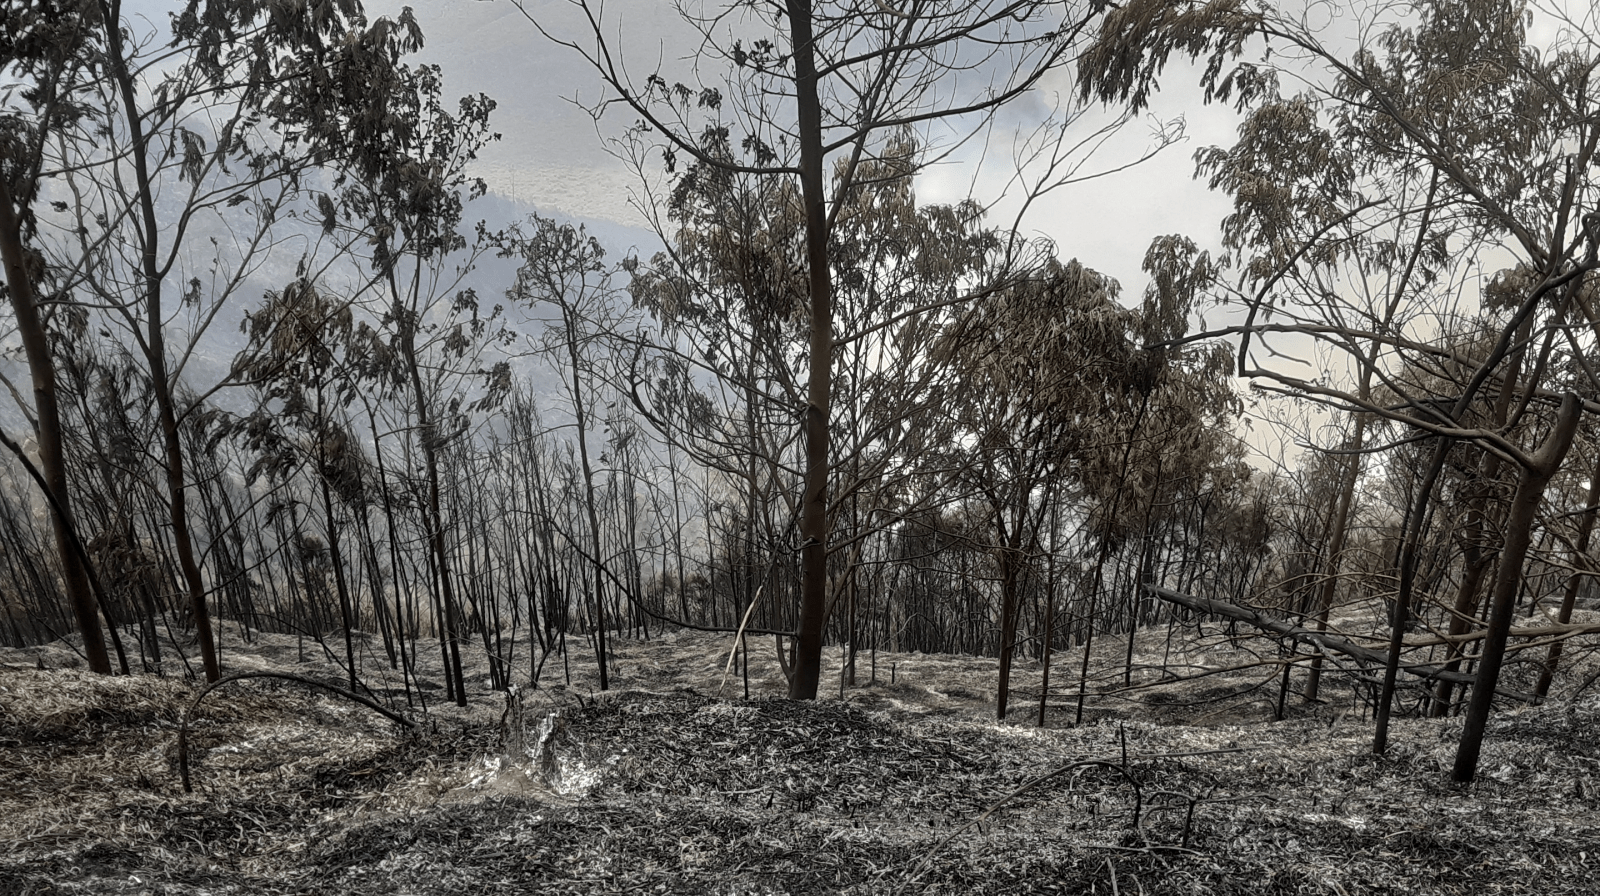 Kebakaran hutan di kawasan Taman Nasional Bromo Tengger Semeru. | Foto: Rokhmad/Garda Animalia